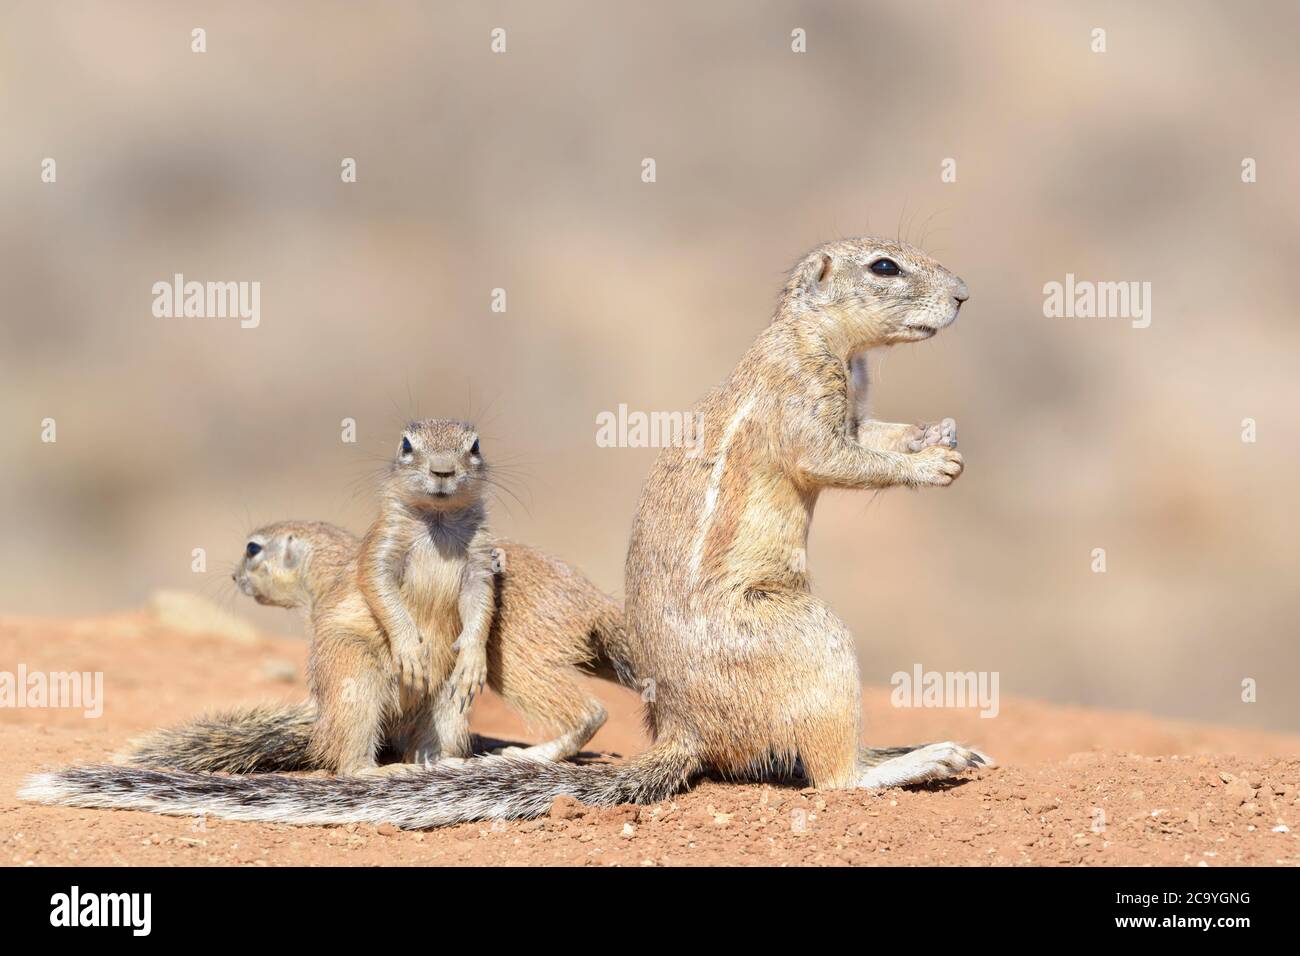 Ground Squirrel (Xerus inaurus), family, Mountain Zebra National Park, South Africa, Stock Photo